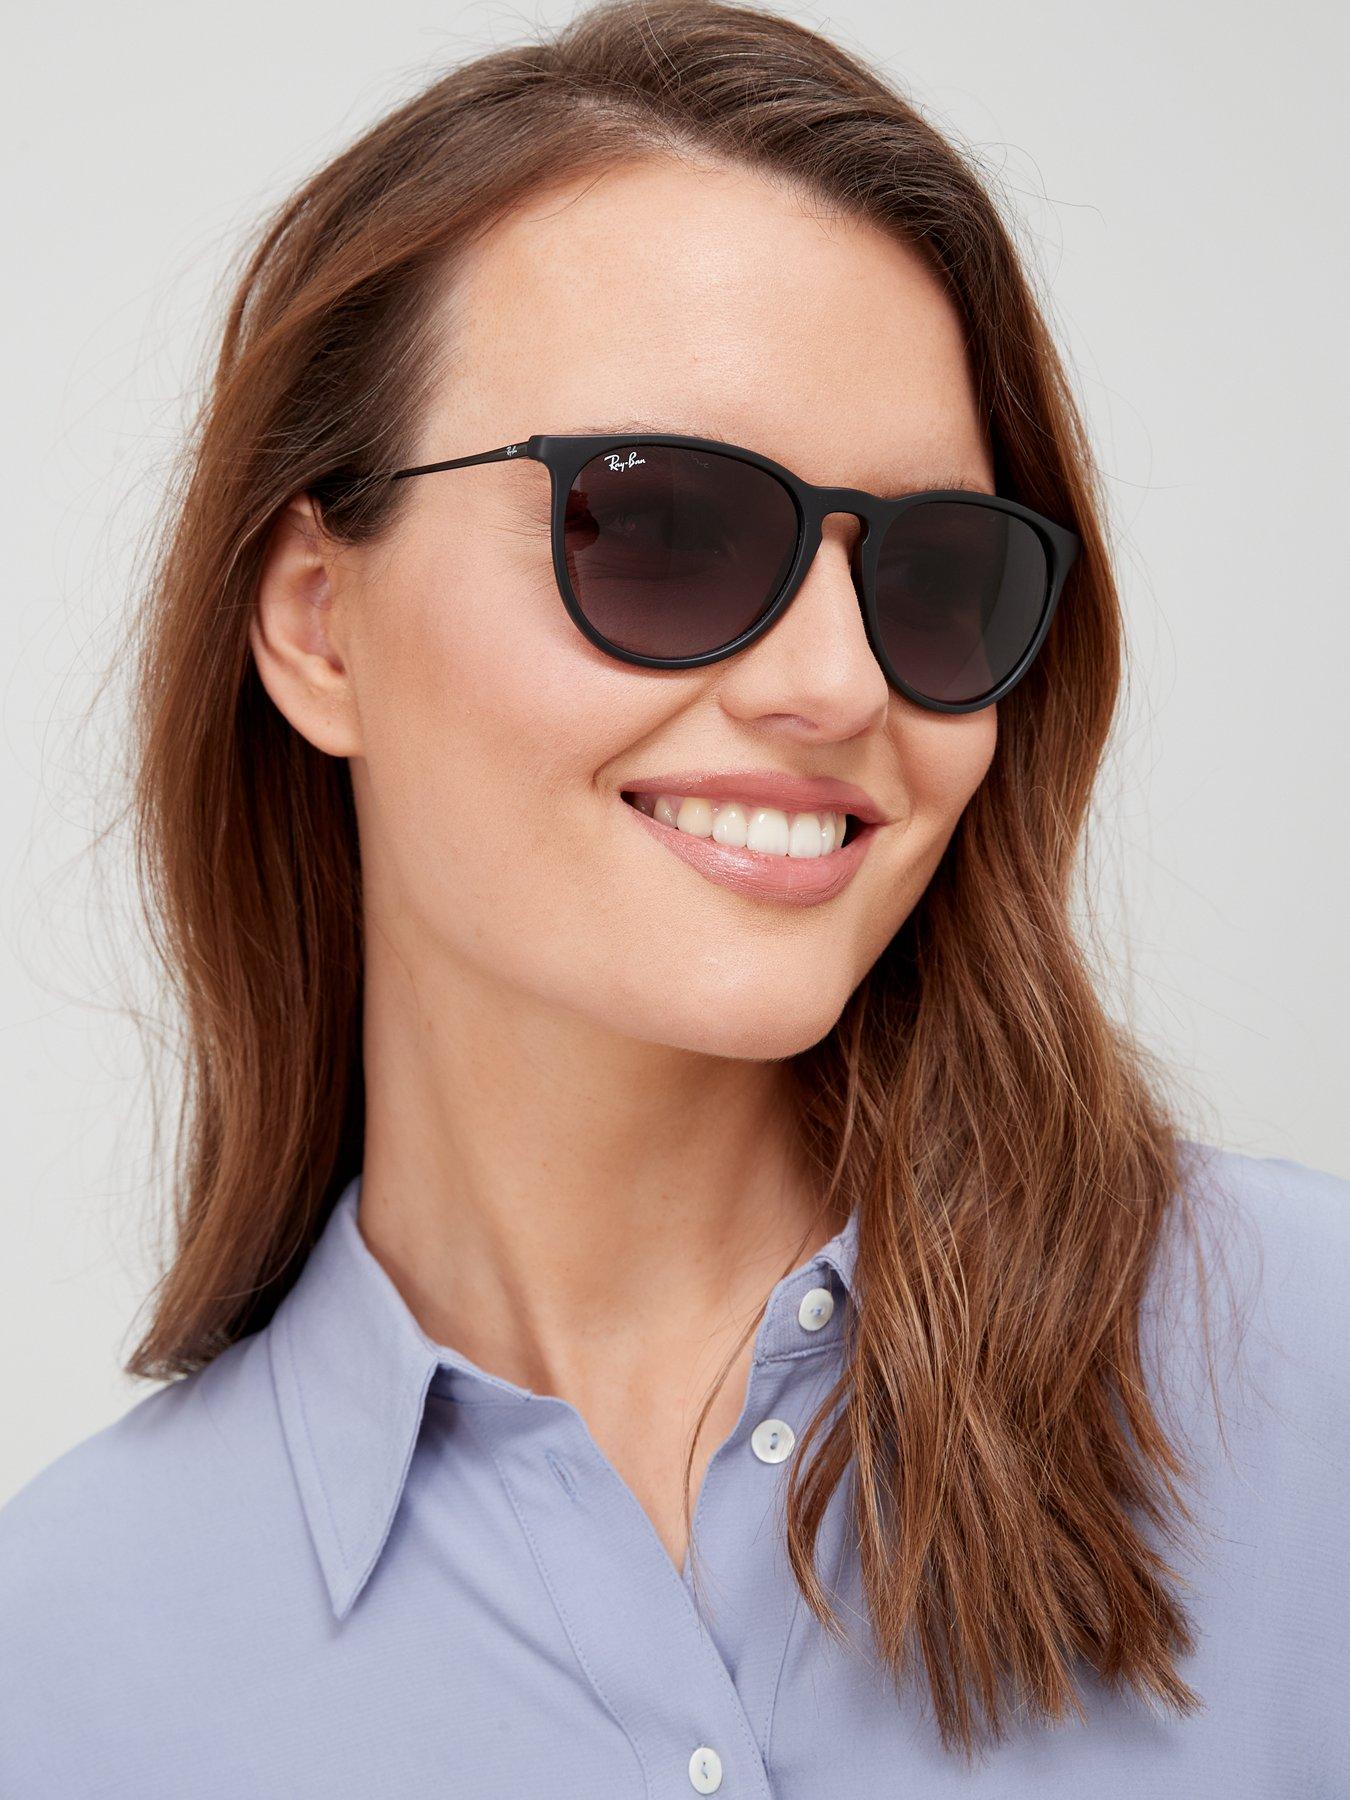 raybans sunglasses womens